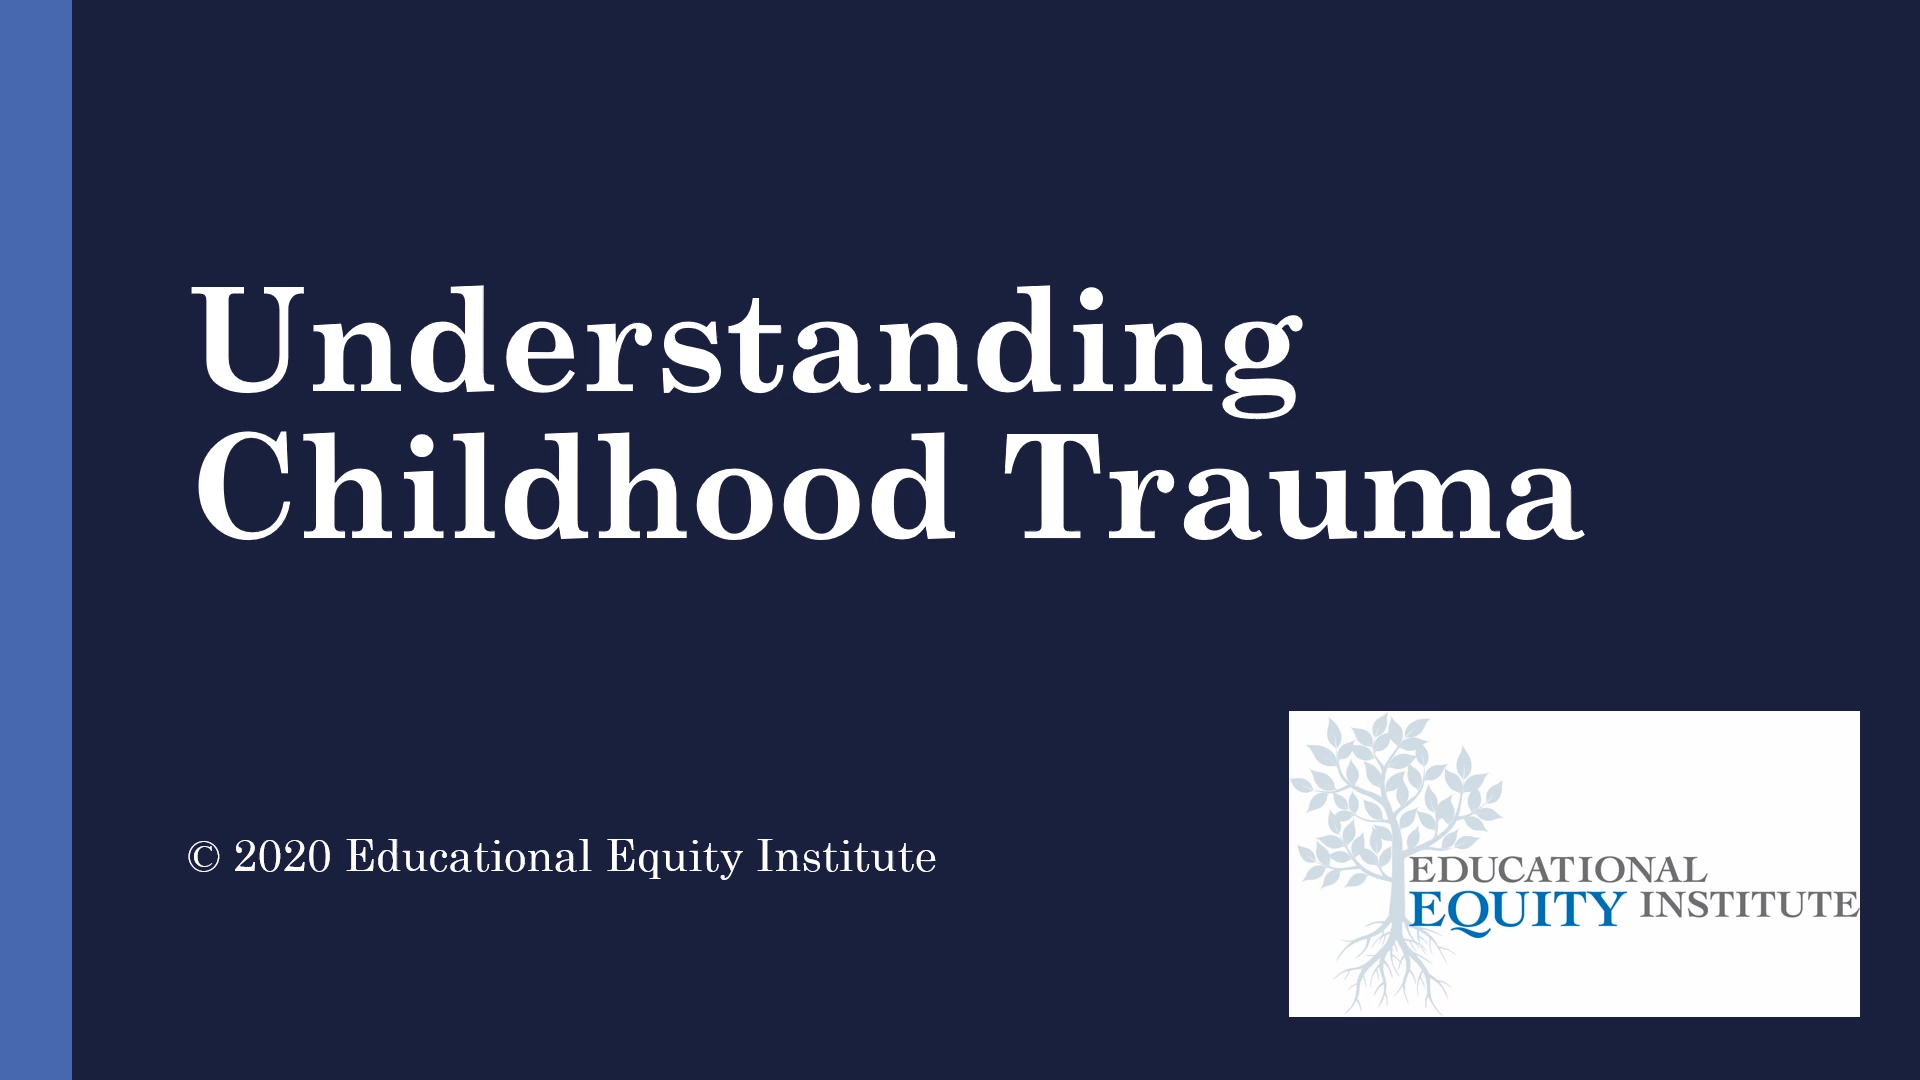 Childhood Trauma Training Module